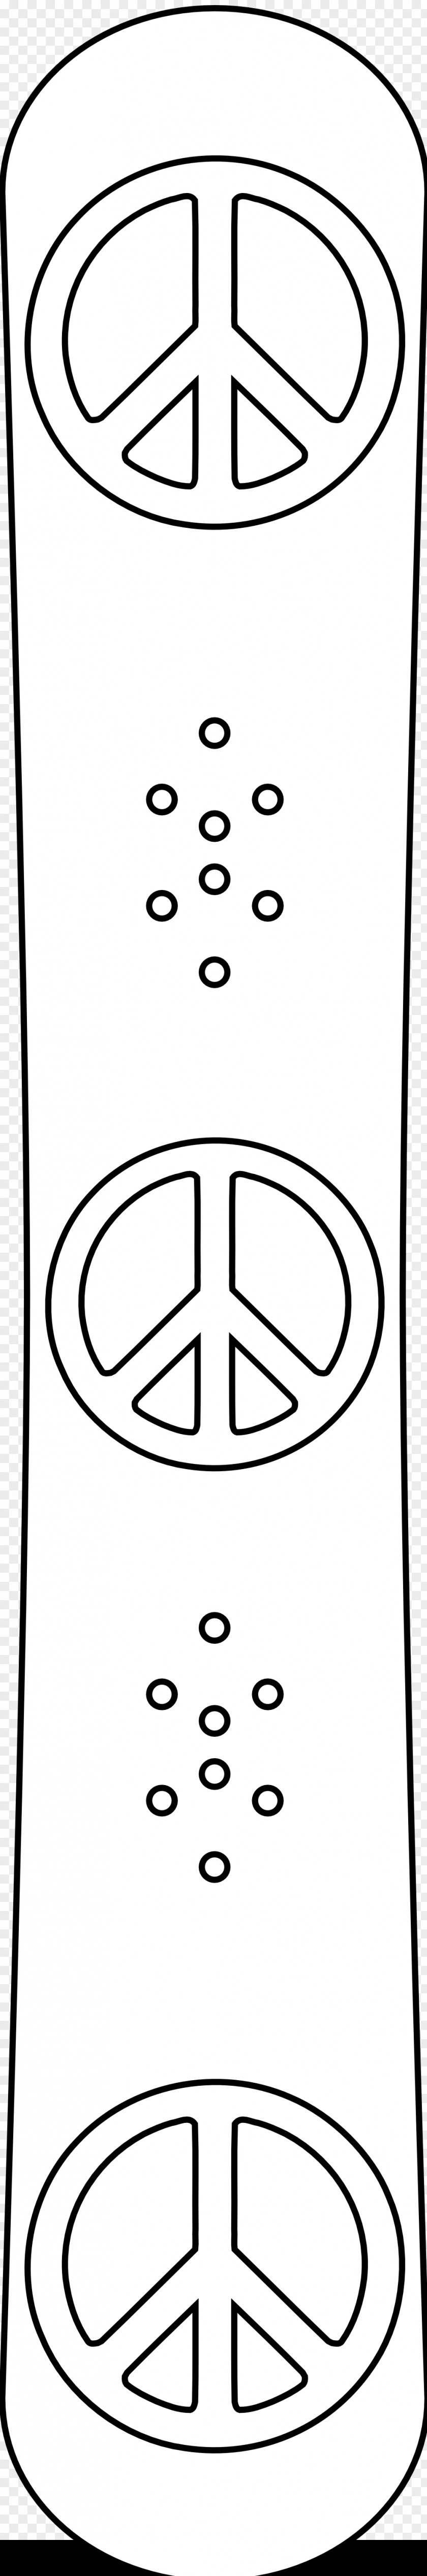 Design Peace Symbols Line Art Pattern PNG